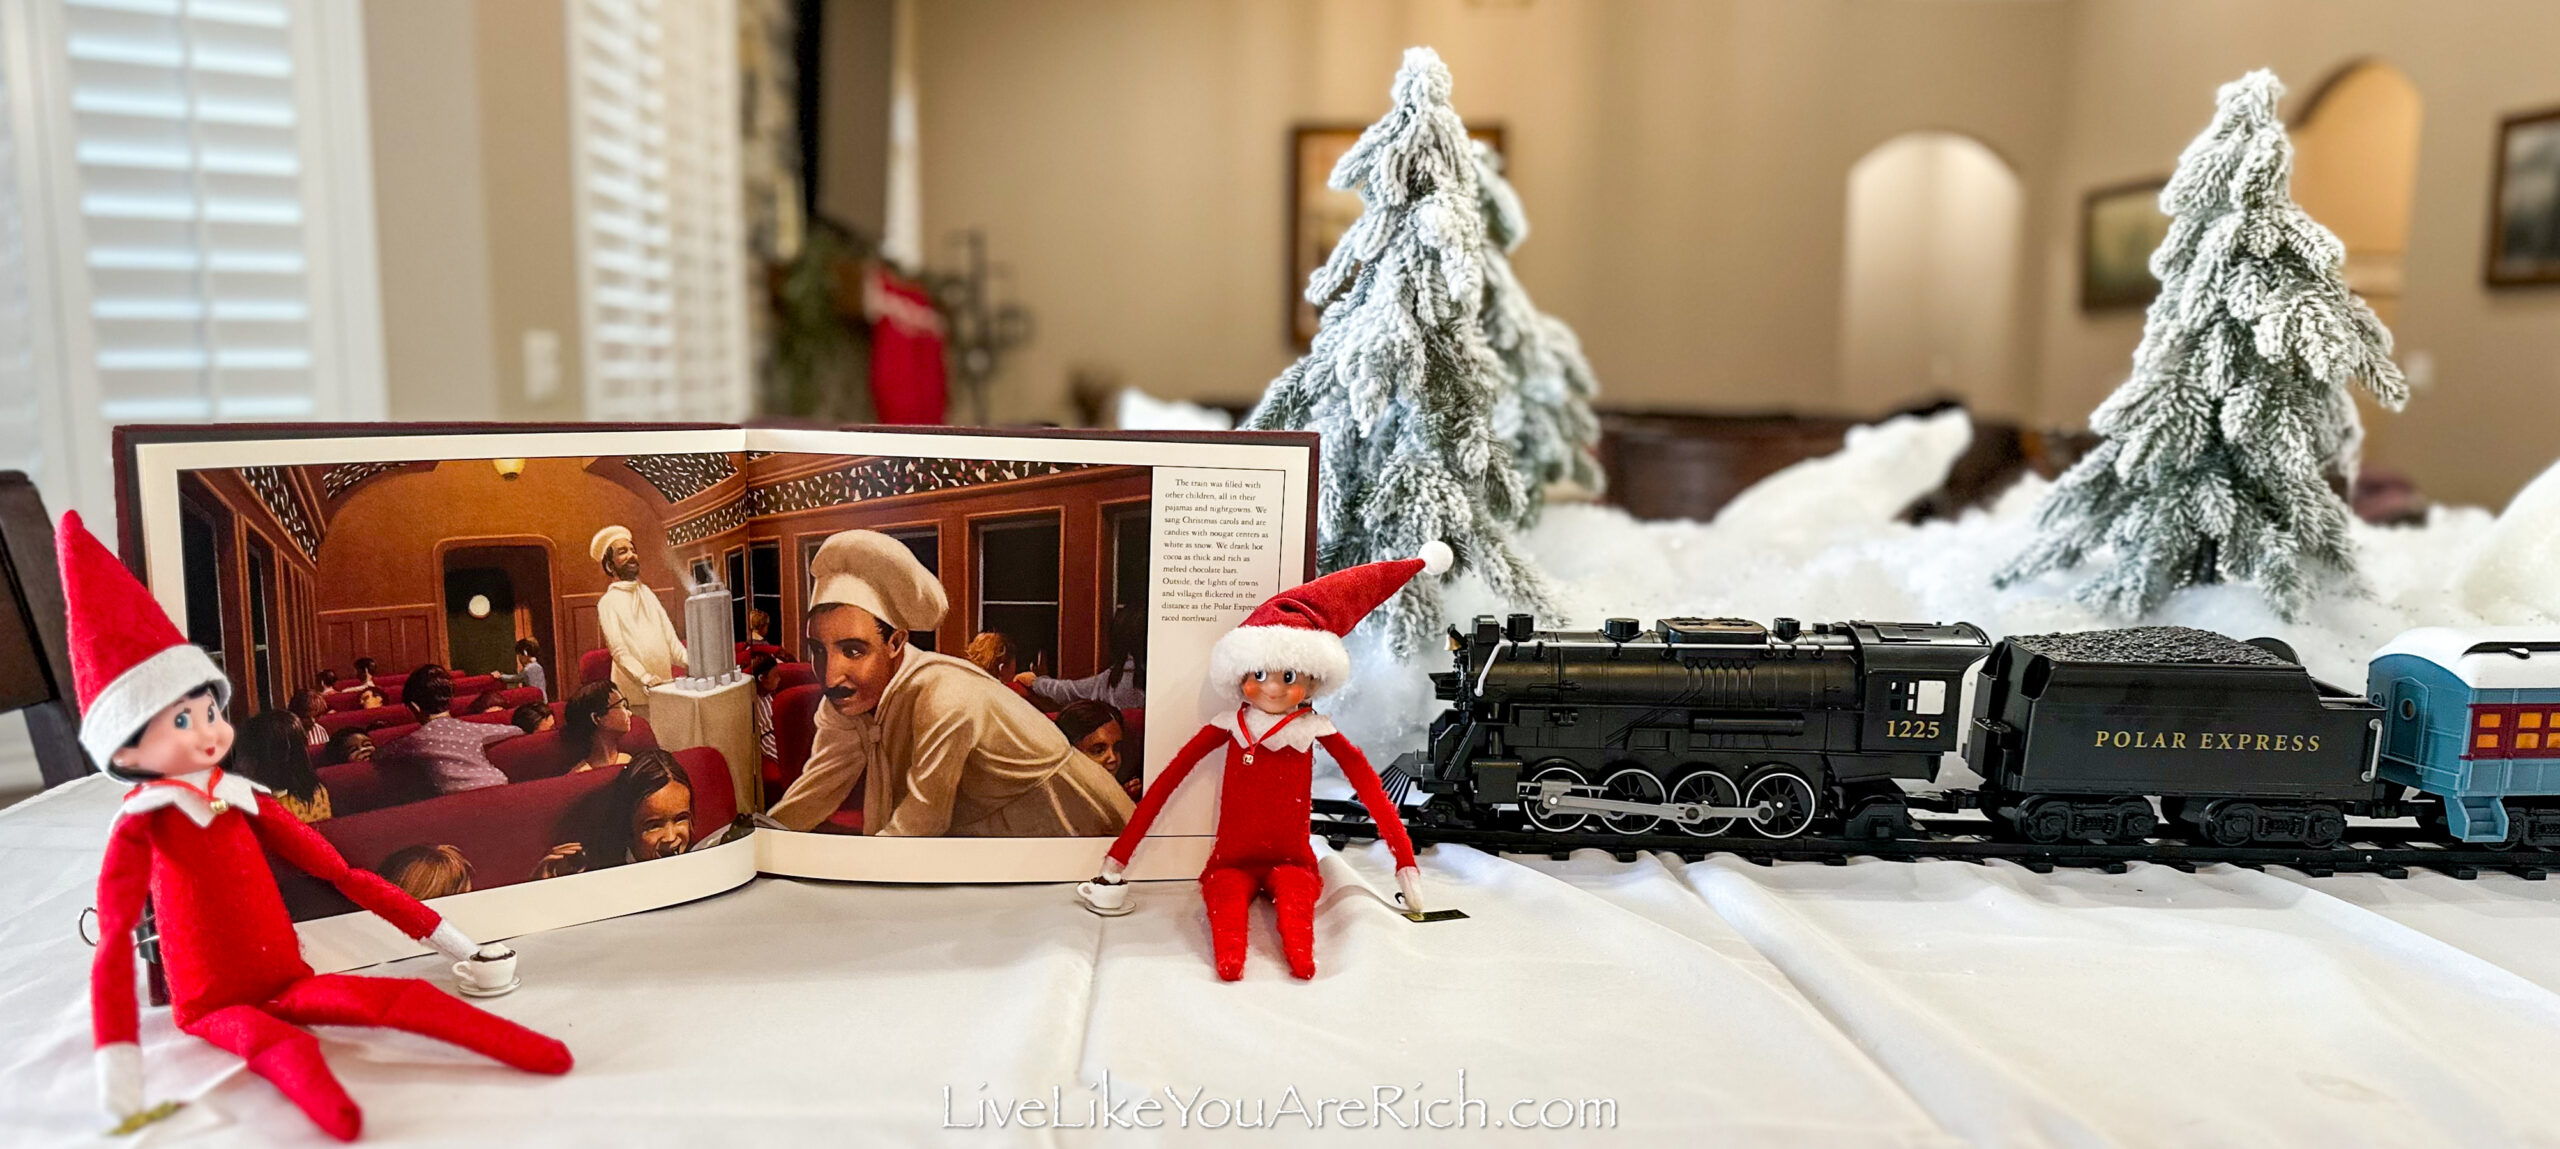 Elf on the Shelf: The Polar Express